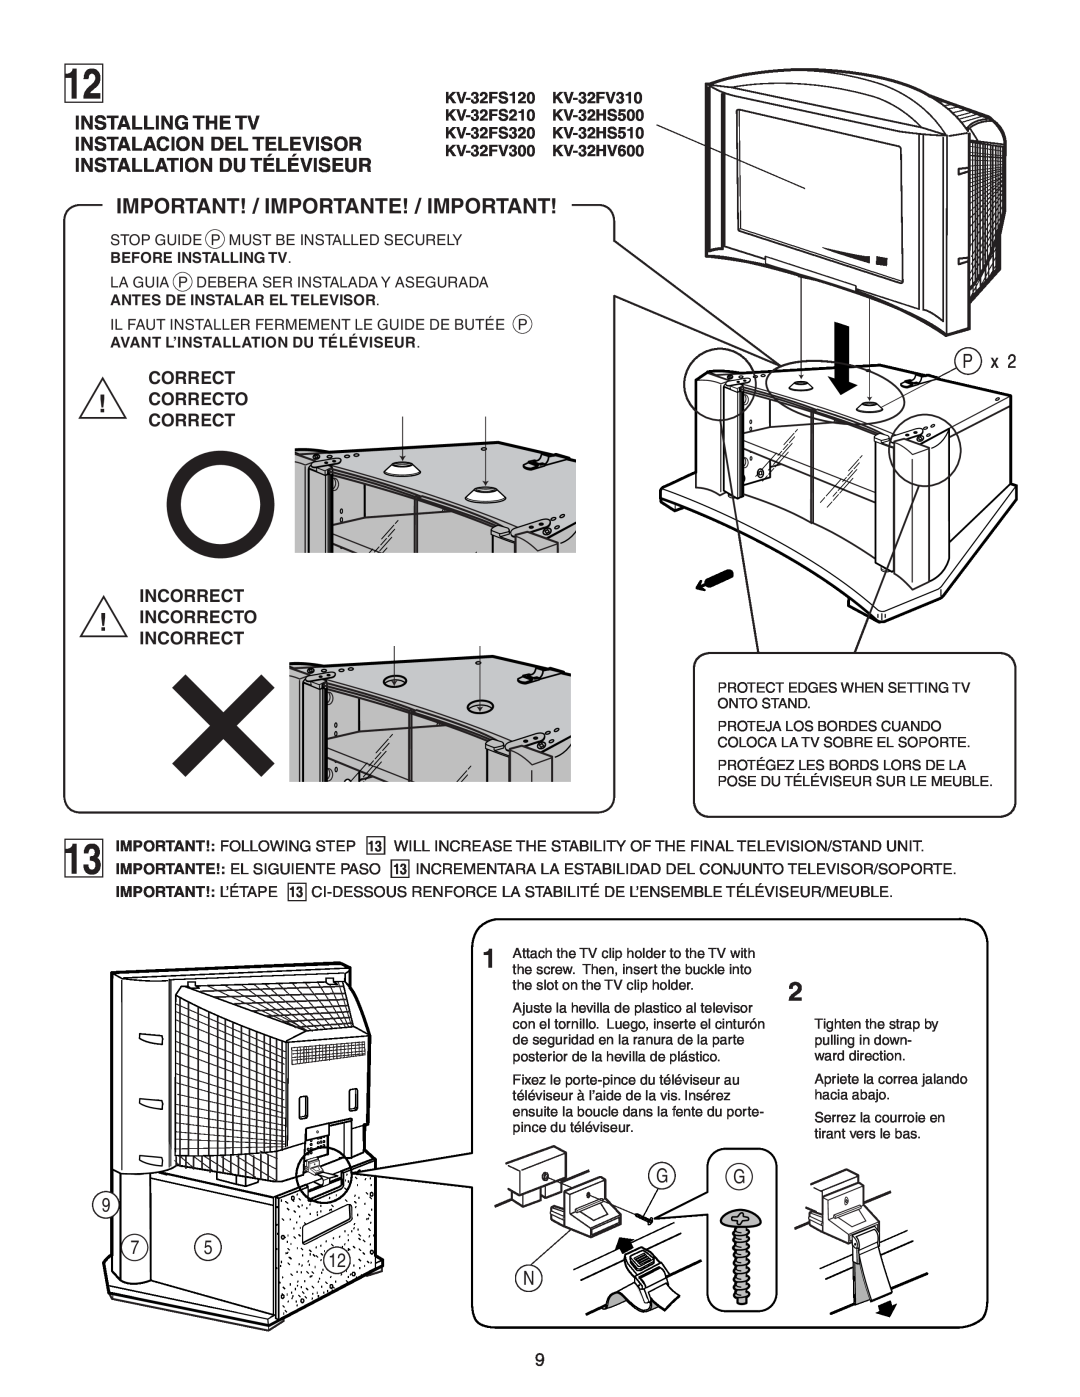 Sony SU-32F2 manual Important! / Importante! / Important, Installing The Tv, Instalacion Del Televisor, G G 12 N 